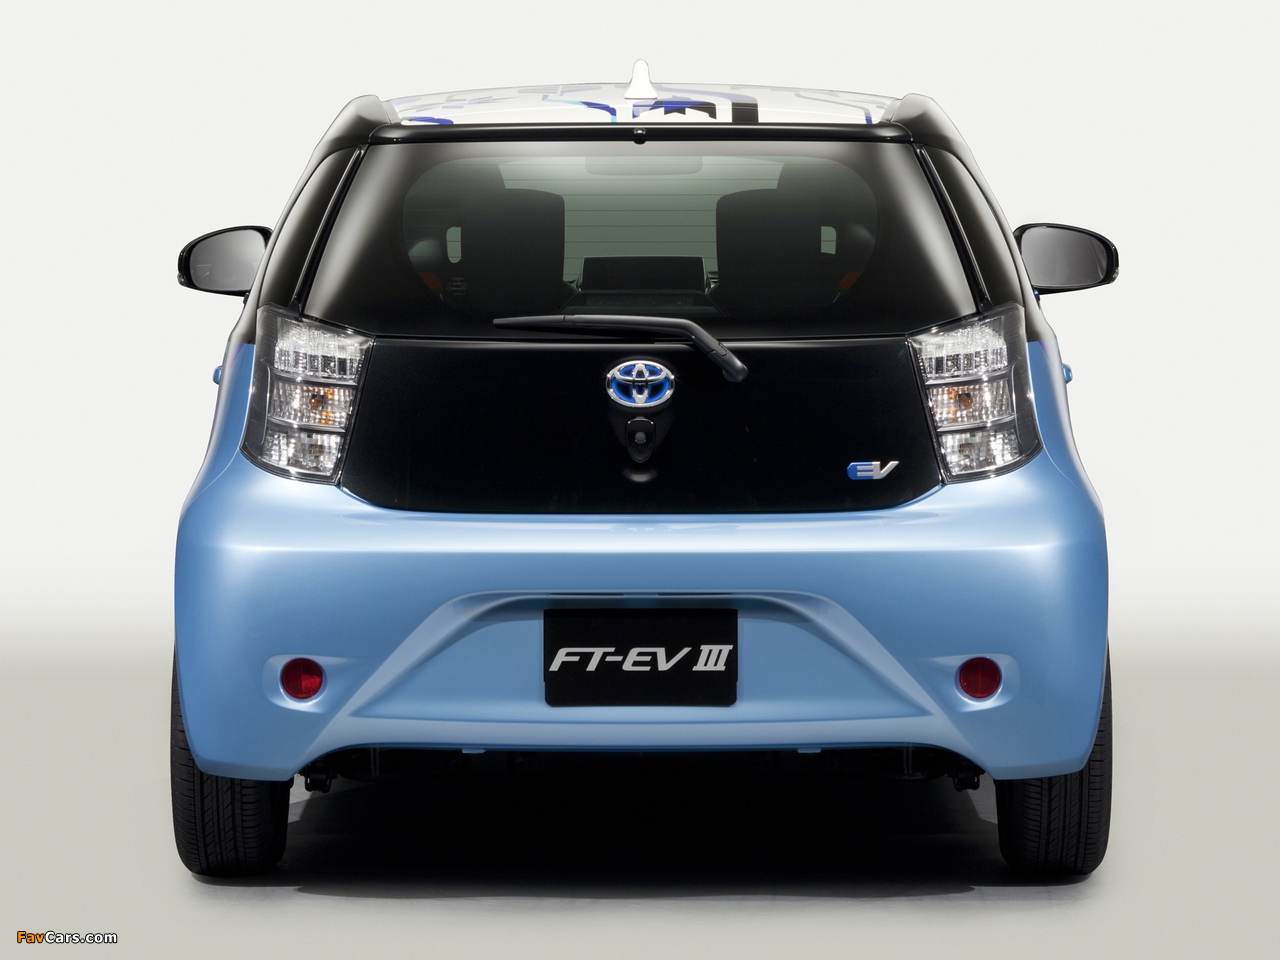 Toyota FT-EV III Concept 2011 photos (1280 x 960)